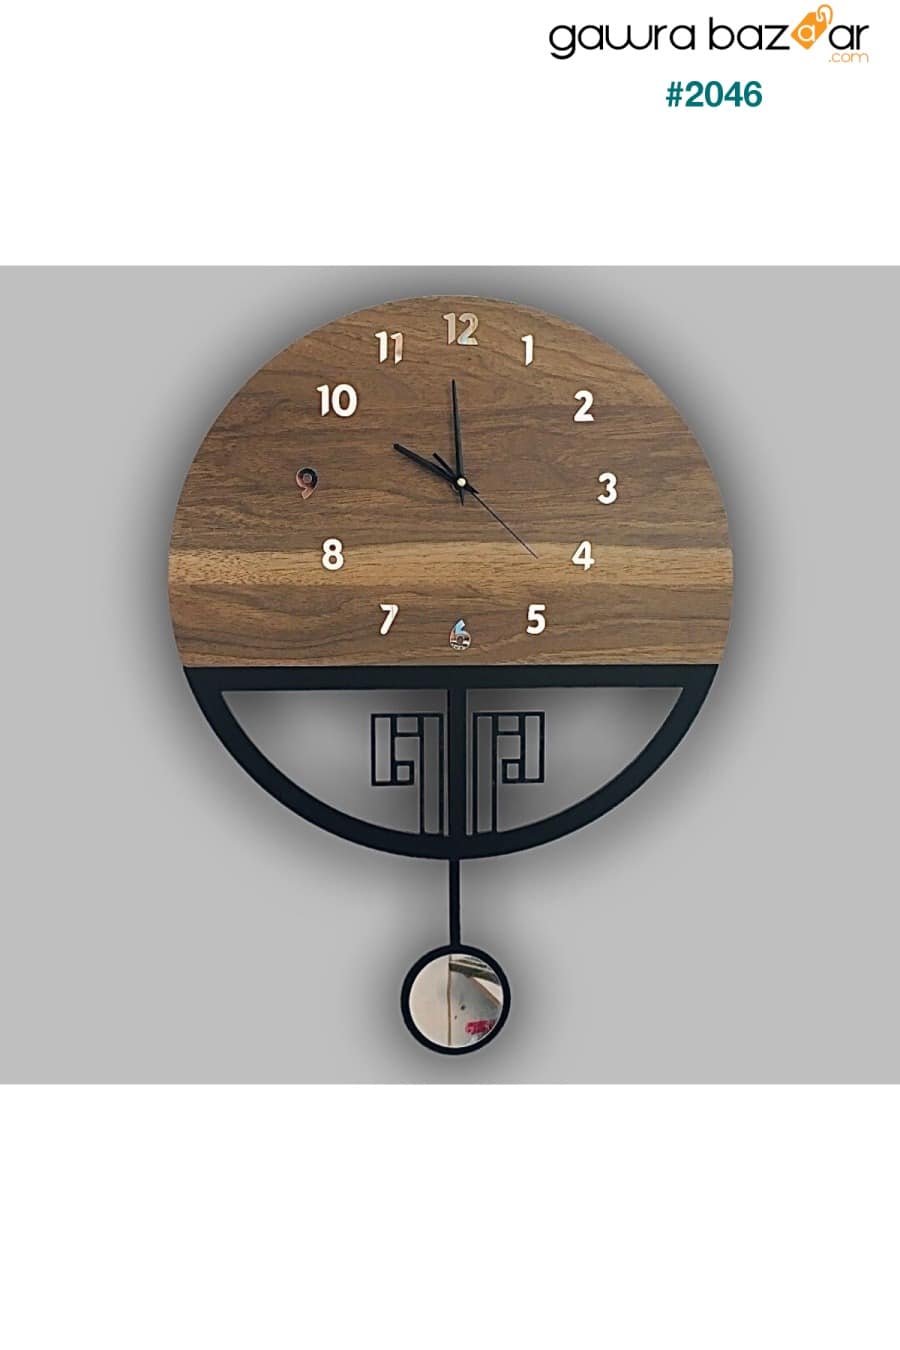 ساعة حائط خشبية بندول صامت ، ساعة بندول ، ساعة حائط ، ساعة حائط خشبية ، ساعة حائط بندول hayalevimahsap 1